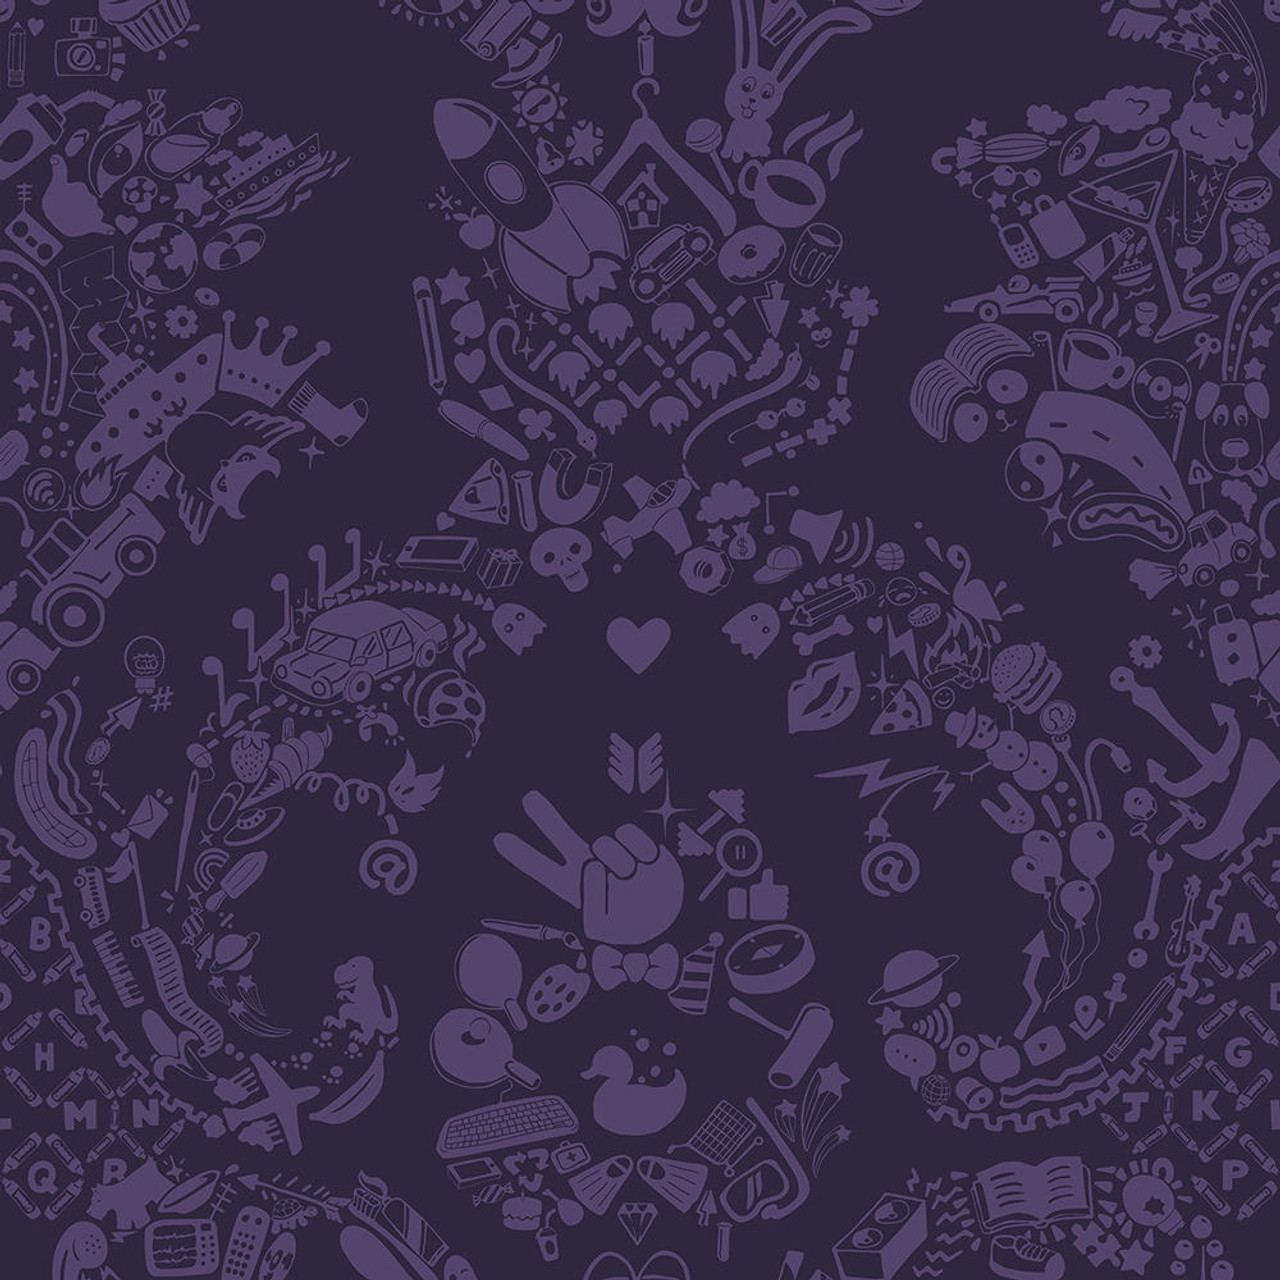 purple and black damask background